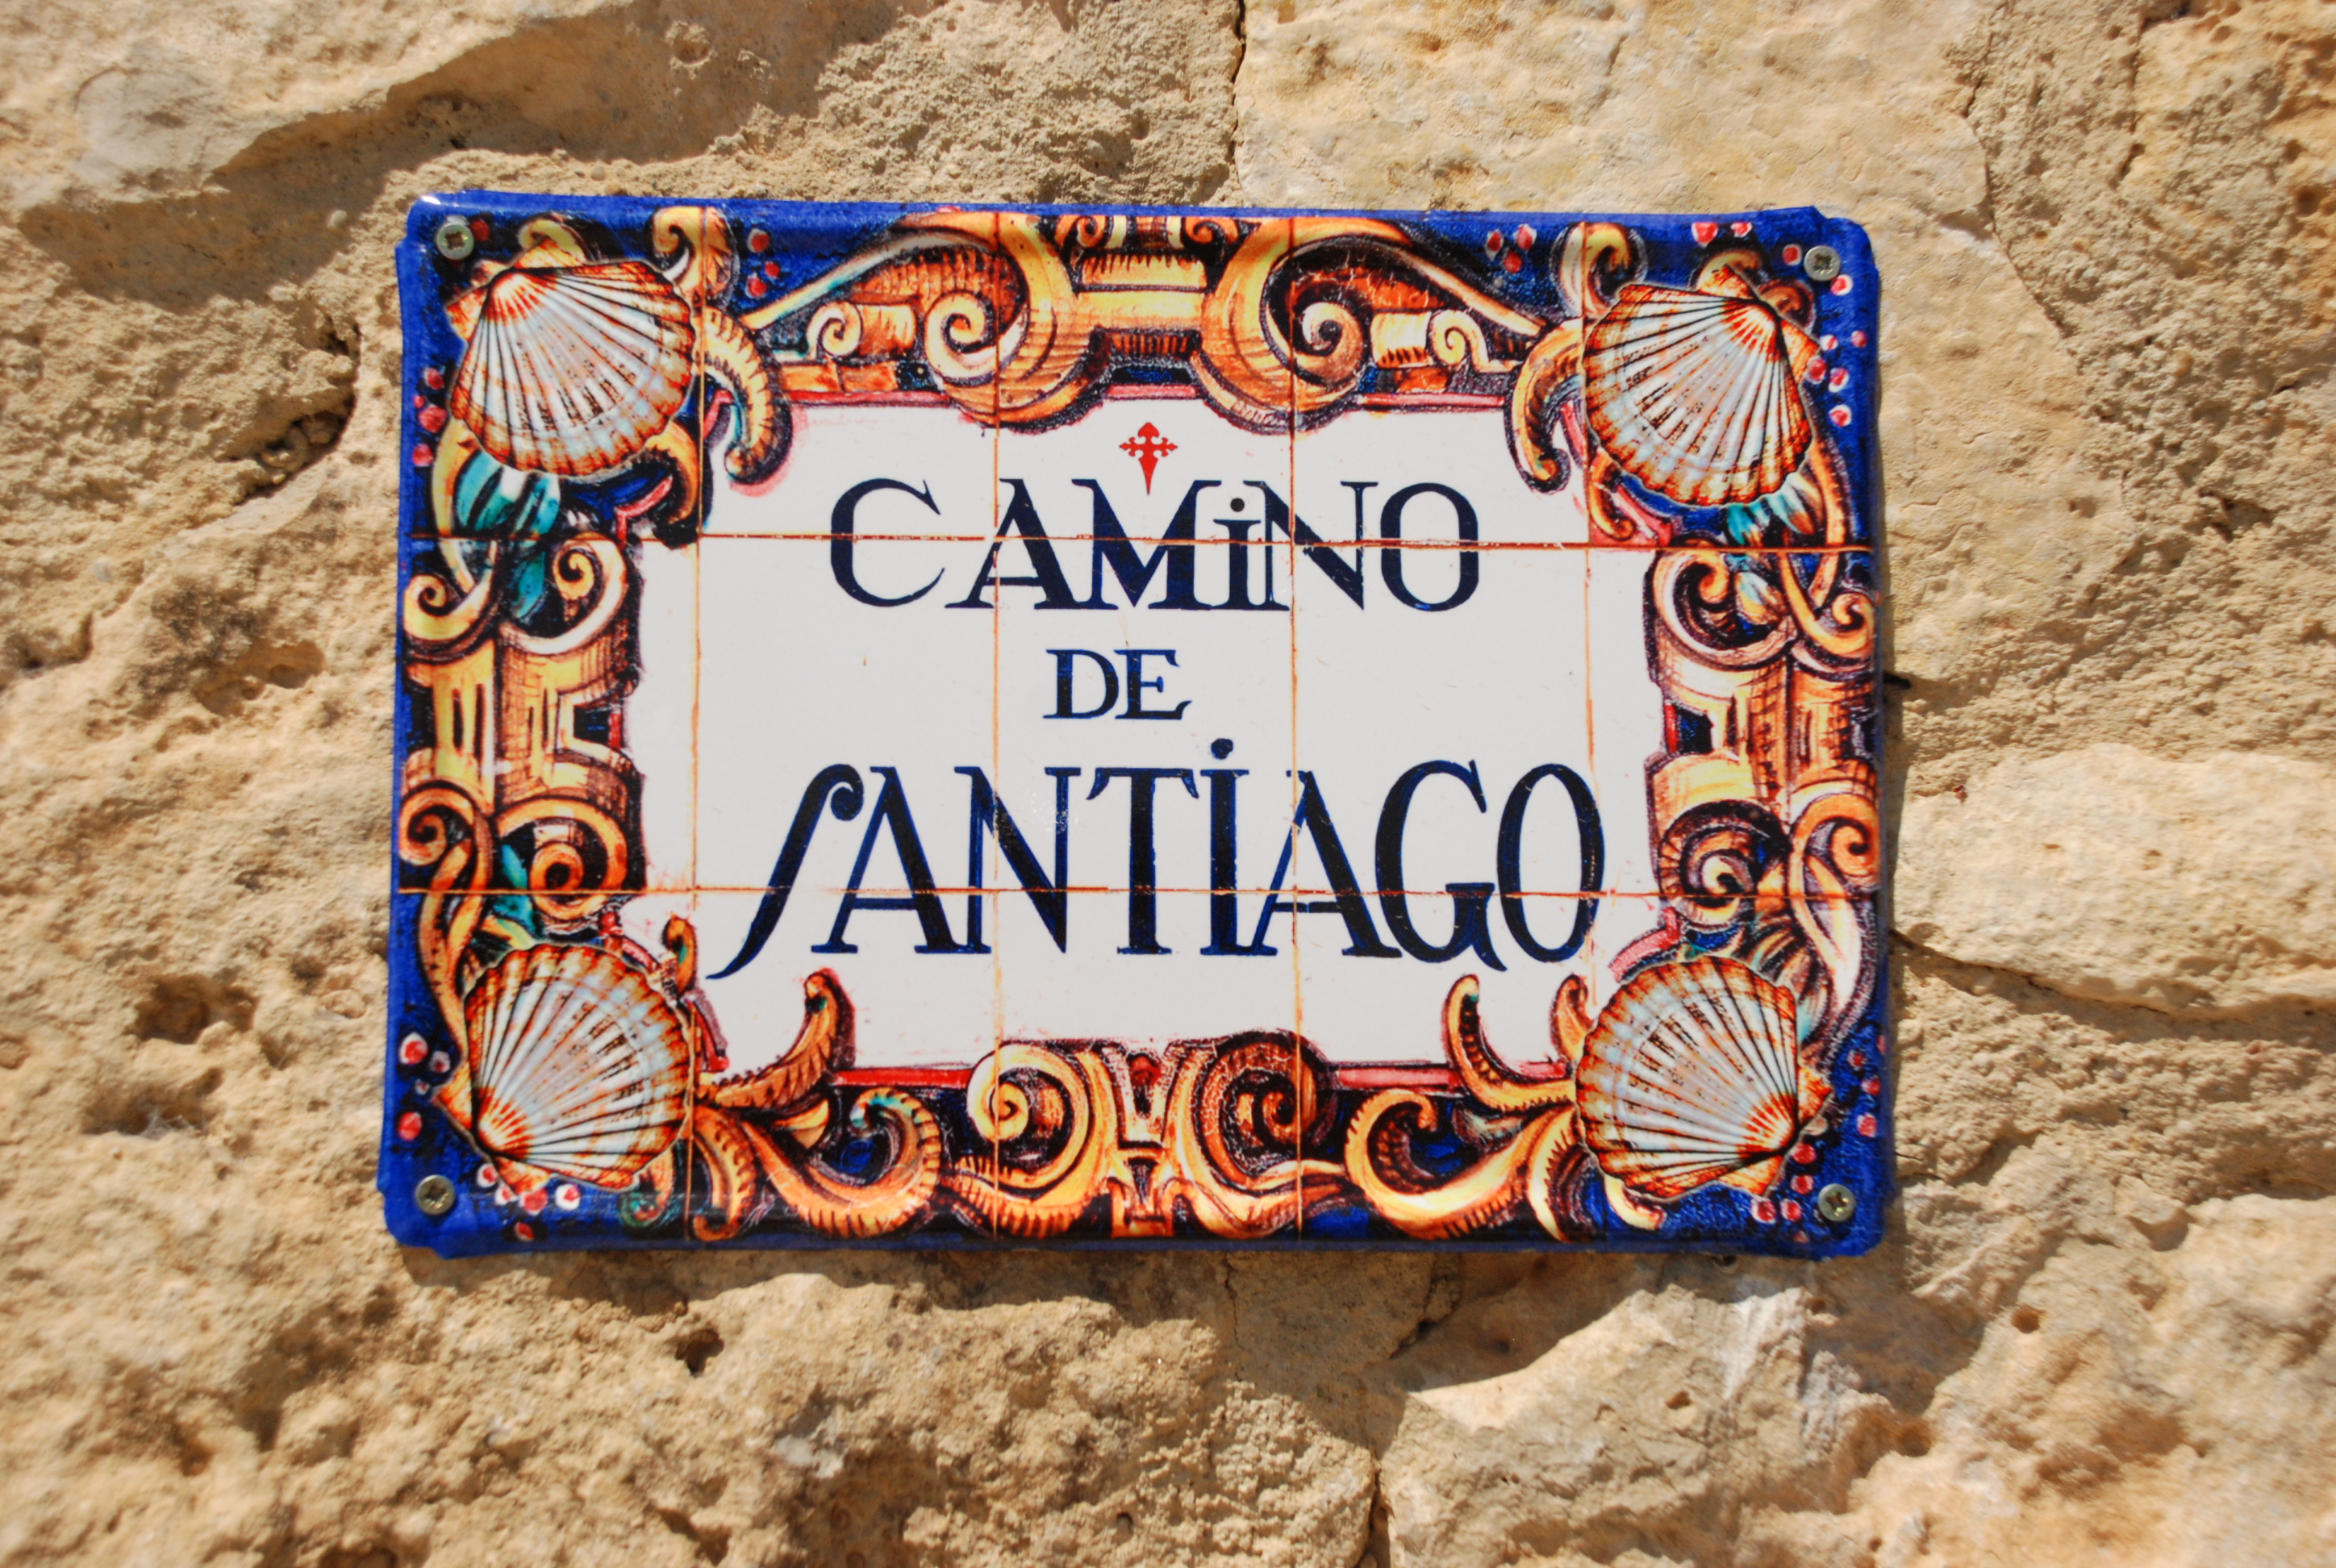 Camino de Santiago: What you need to know